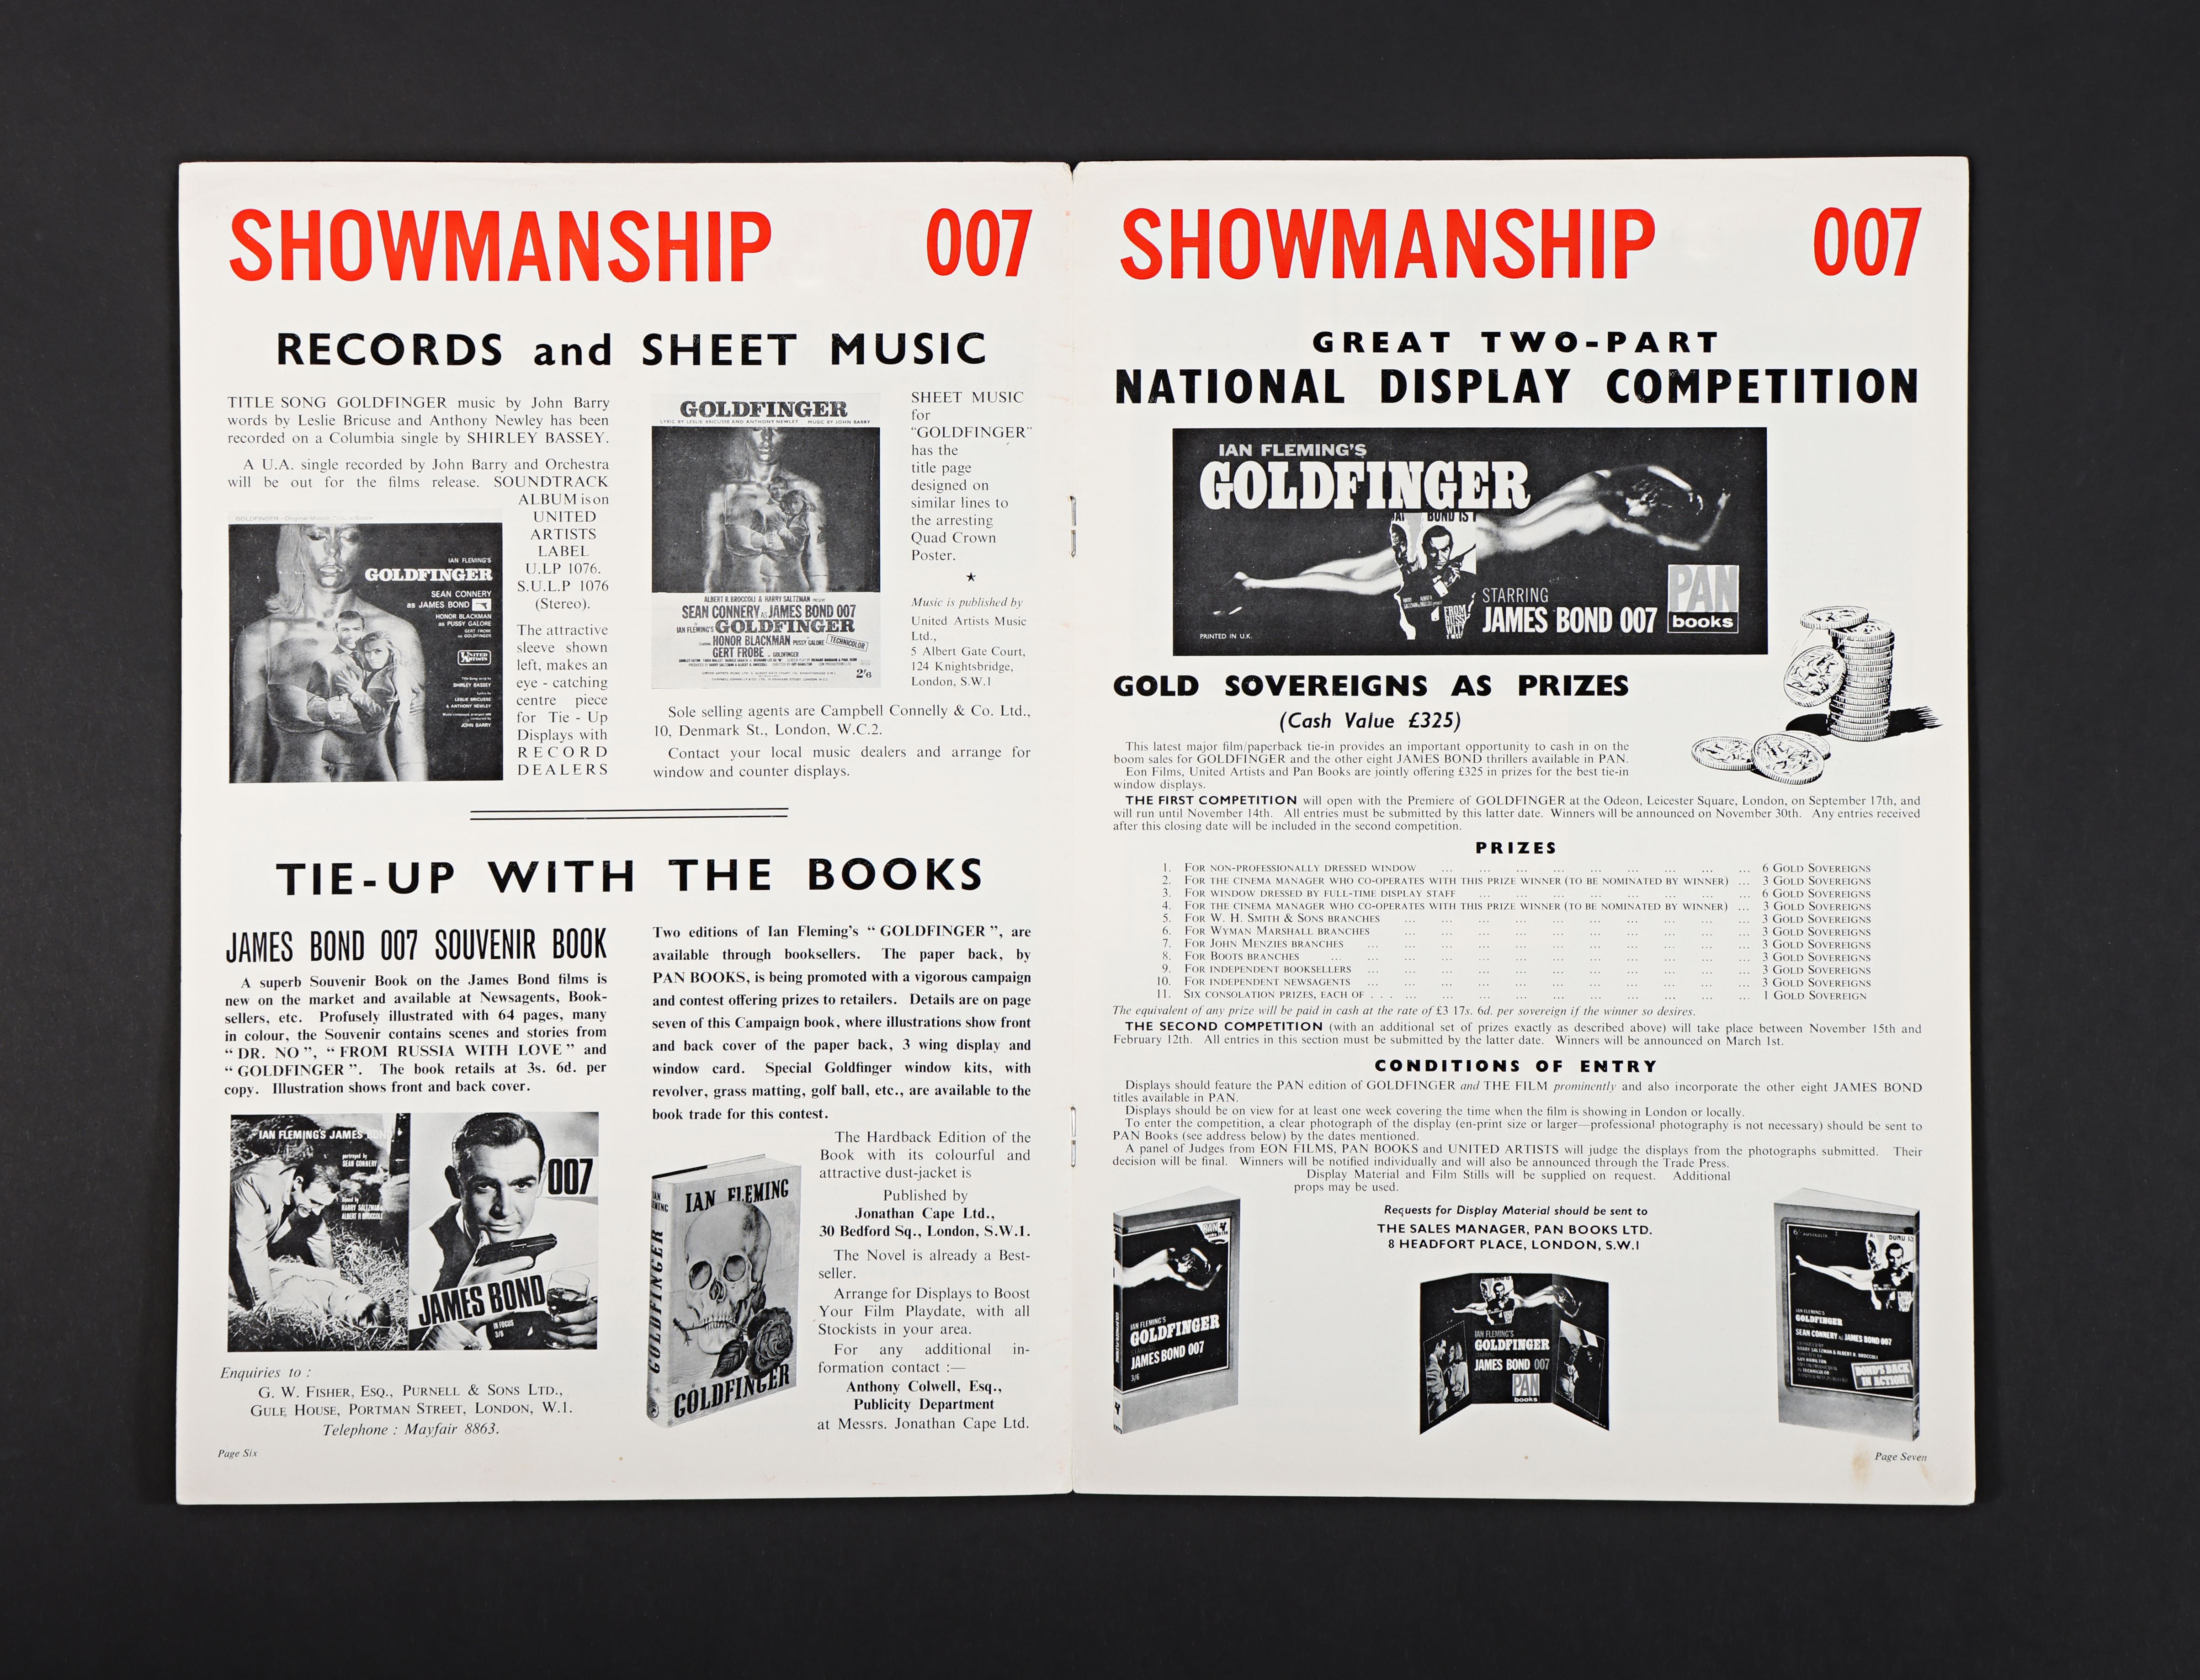 JAMES BOND: GOLDFINGER (1964) - David Frangioni Collection: British Exhibitors' Campaign Book, 1964 - Image 3 of 3